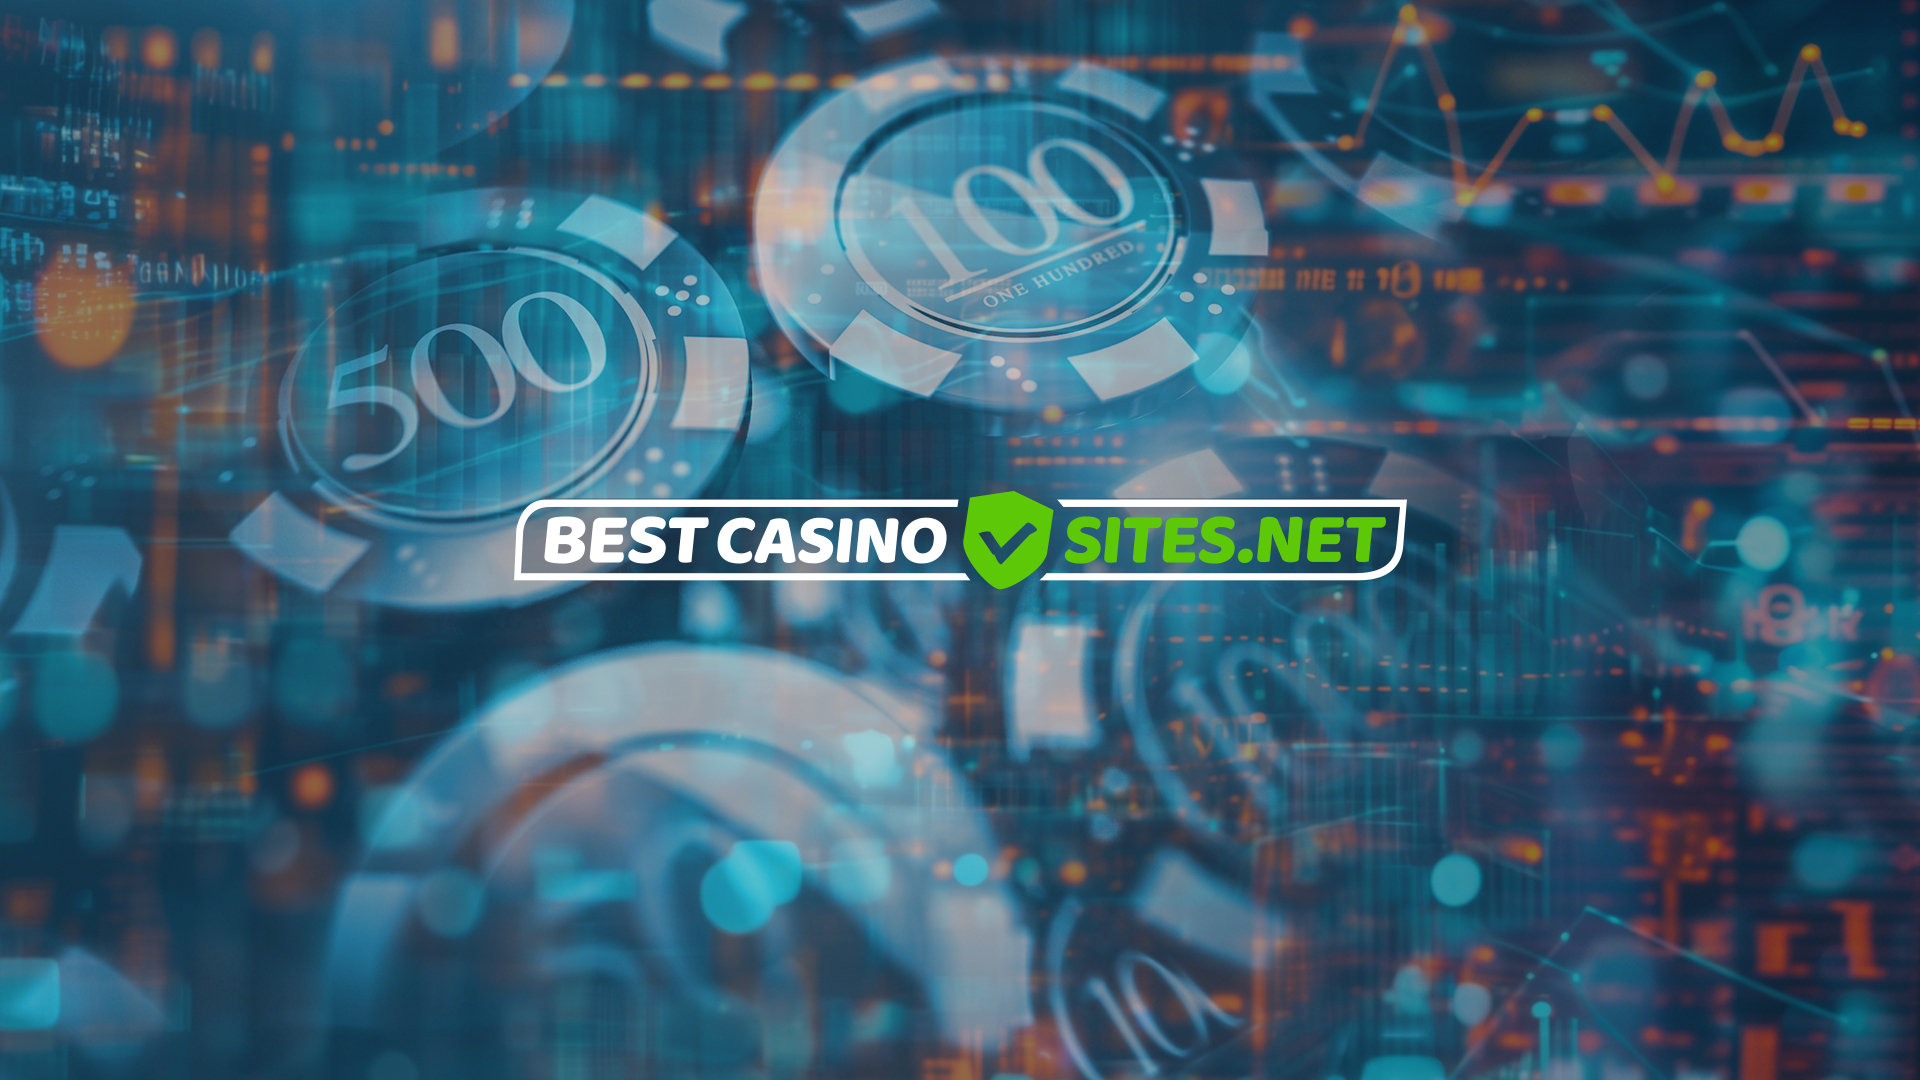 The Logo of BestCasinoSites.net, a Casino Review & Ranking Website